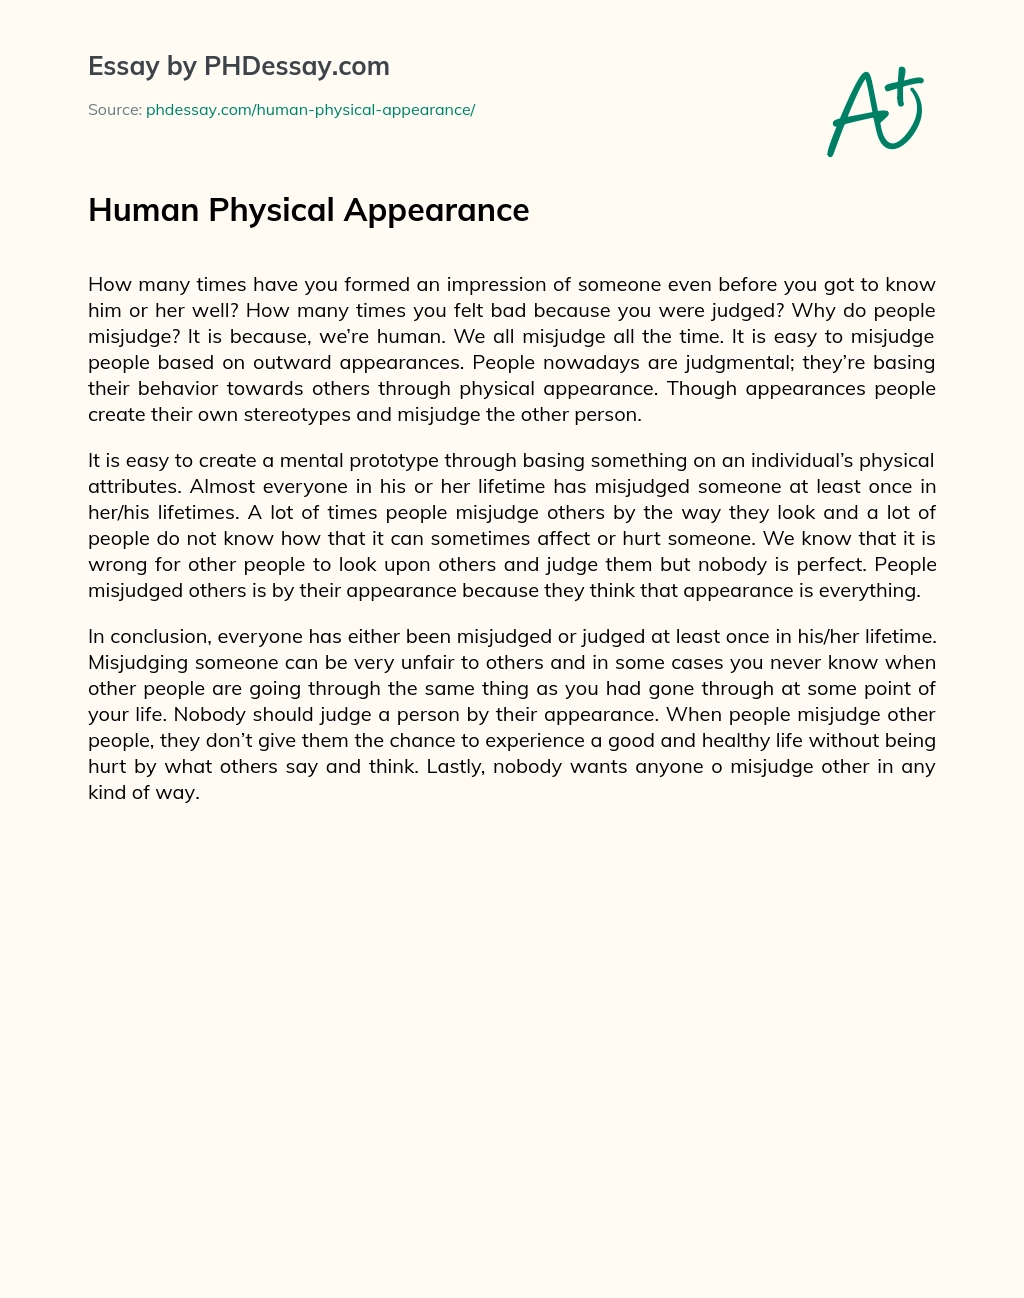 Human Physical Appearance essay